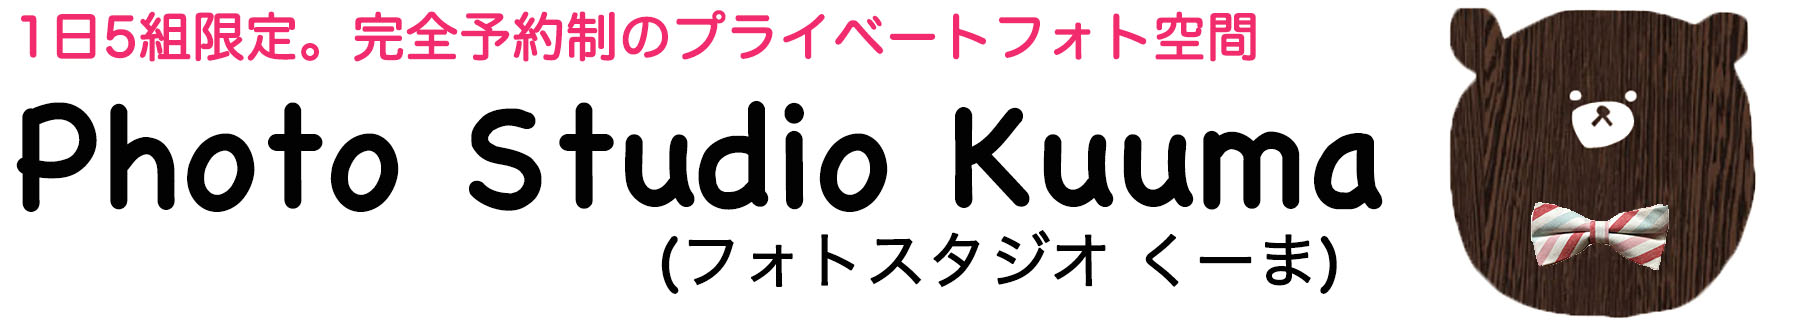 Photo Studio Kuuma/大阪のフォトスタジオ